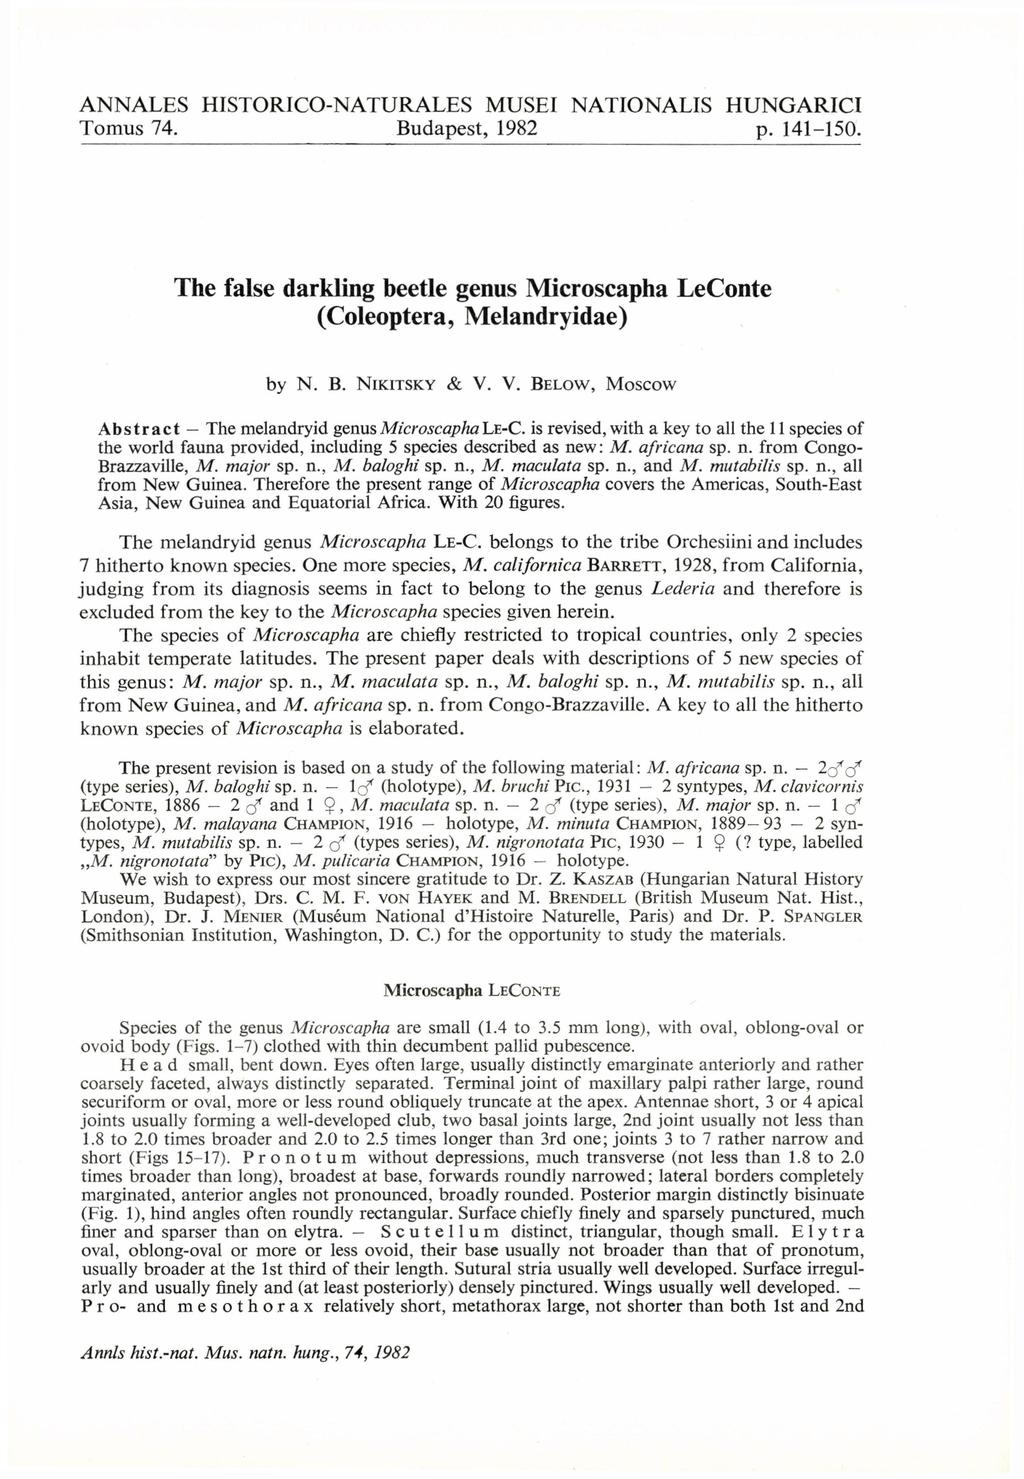 ANNALES HISTORICO-NATURALES MUSEI NATIONALIS HUNGARICI Tomus 74. Budapest, 1982 p. 141-150. The false darkling beetle genus Microscapha LeConte (Coleoptera, Melandryidae) by N. B. NIKITSKY & V.